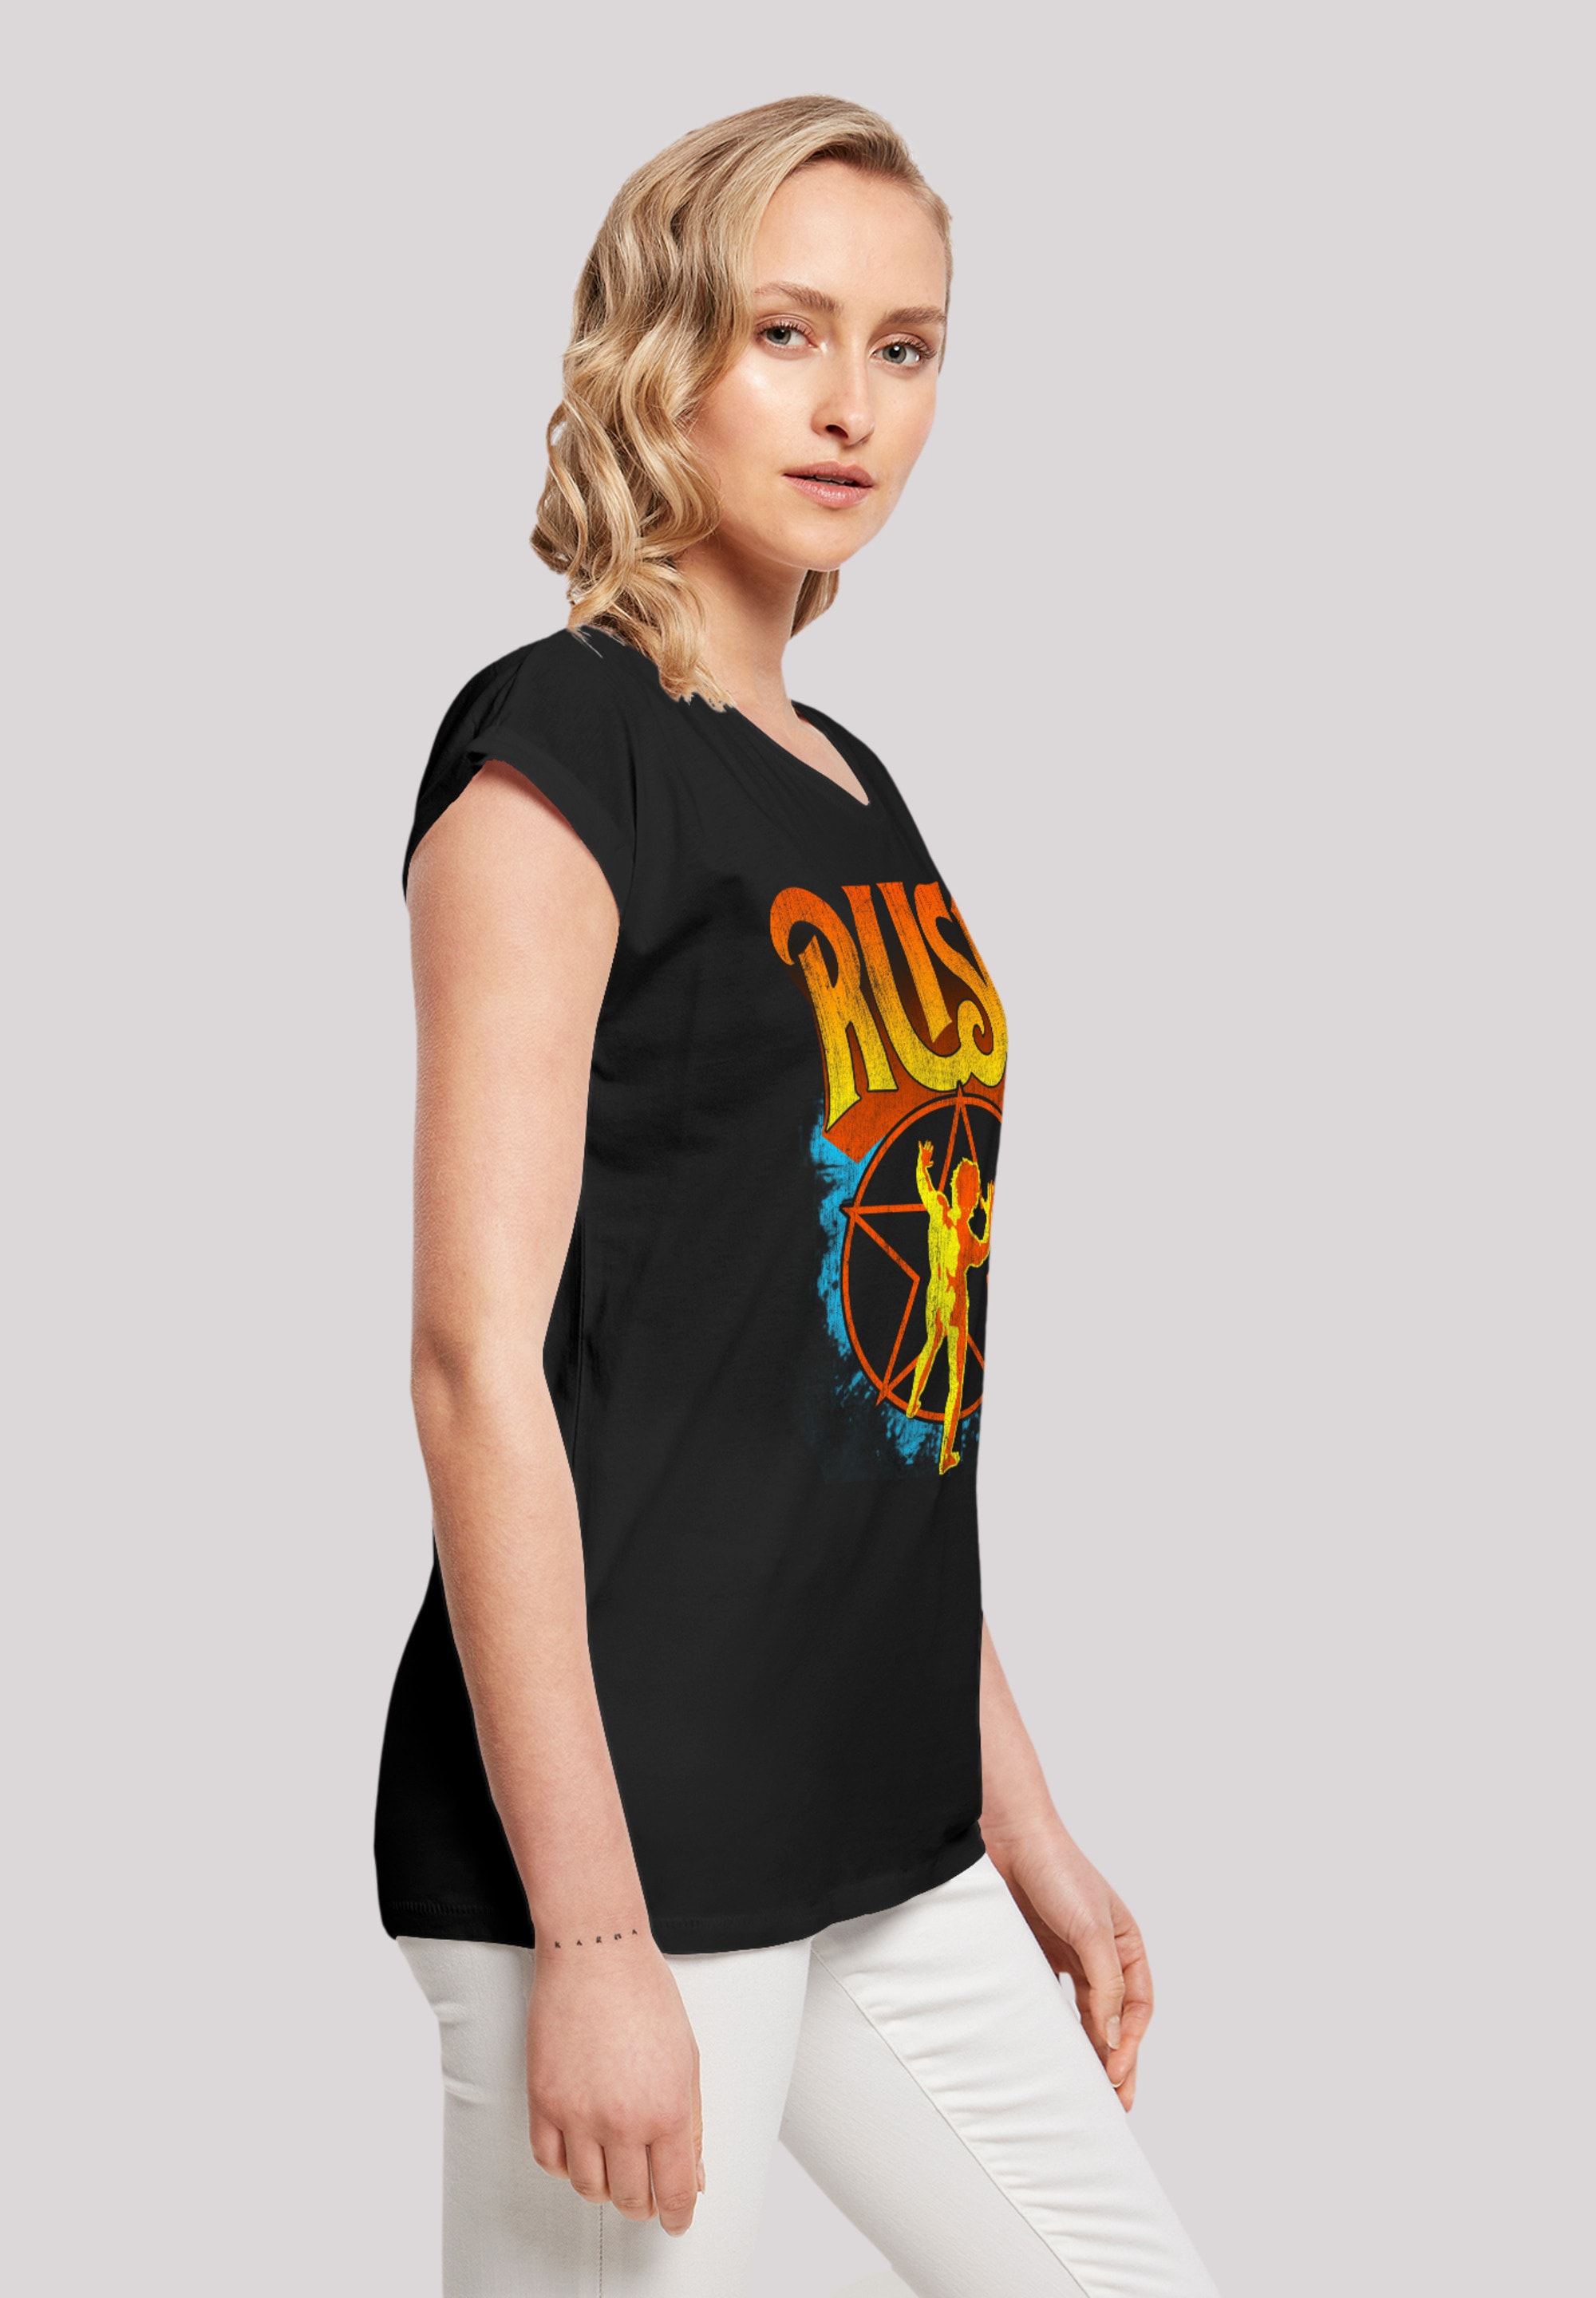 Premium Qualität T-Shirt | walking kaufen Rock Band online I\'m Starman«, F4NT4STIC »Rush